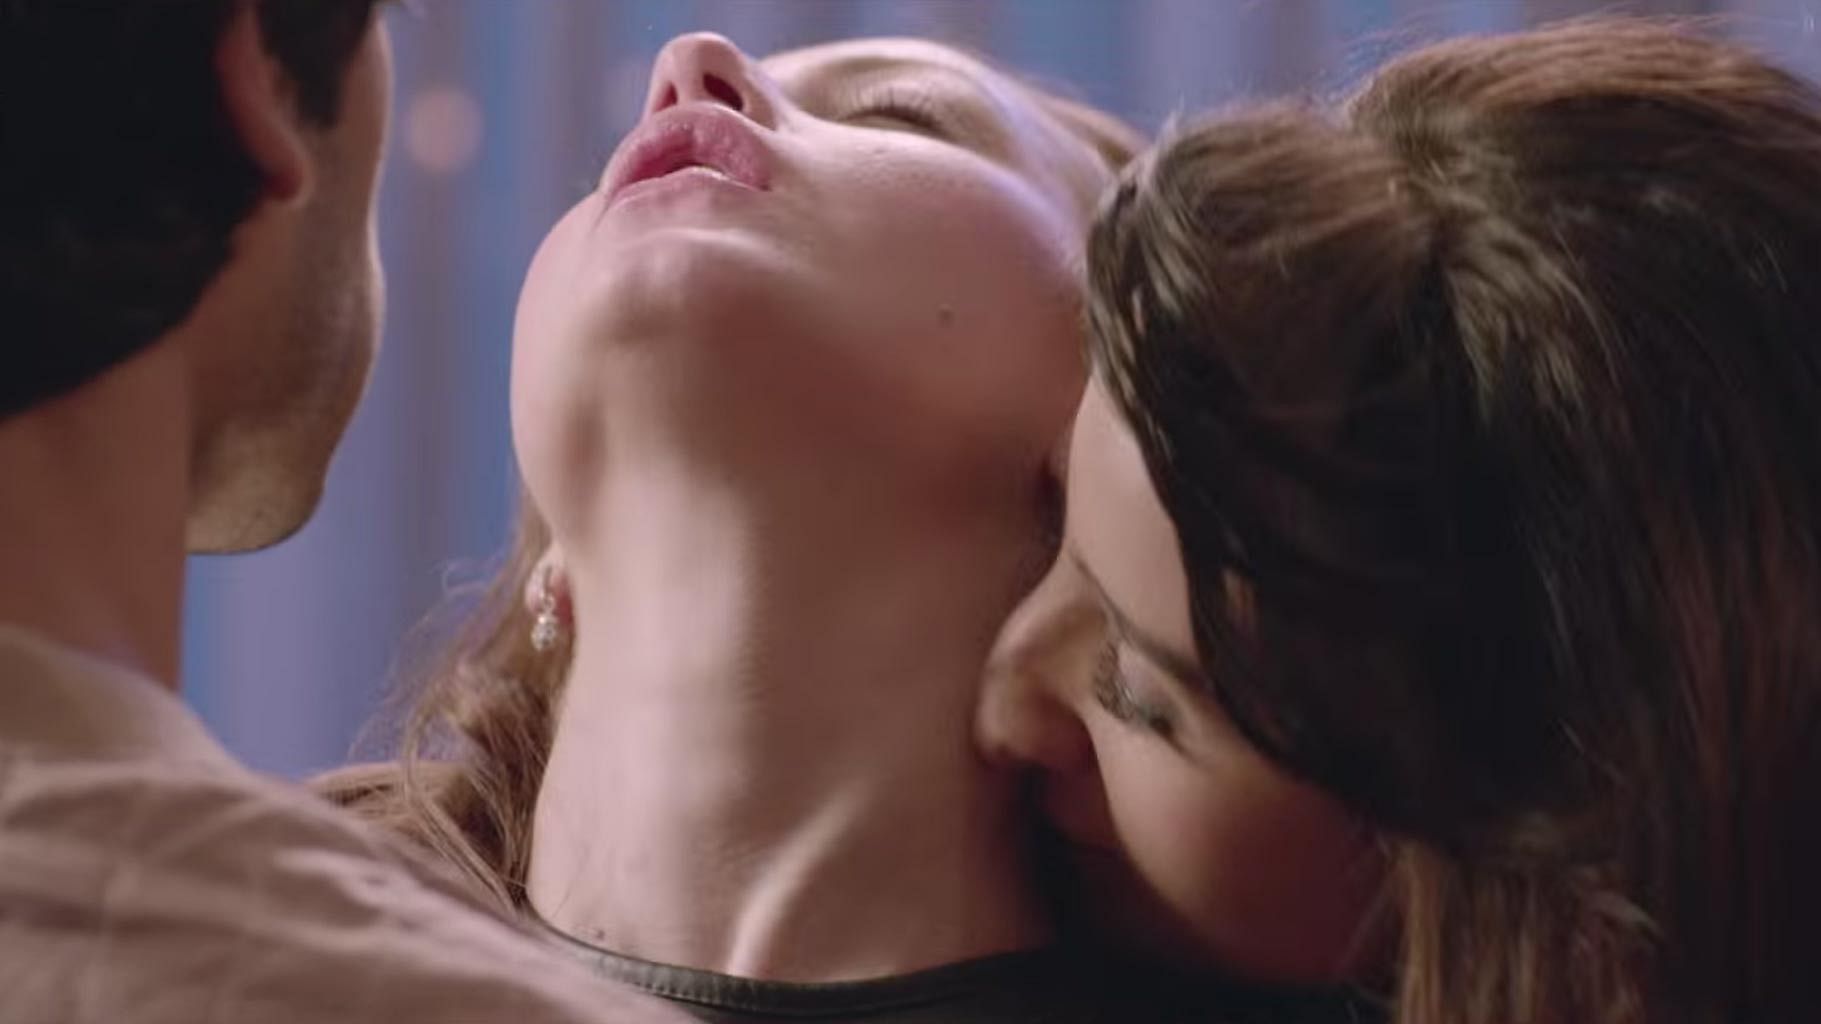 Hot threesome kissing scene